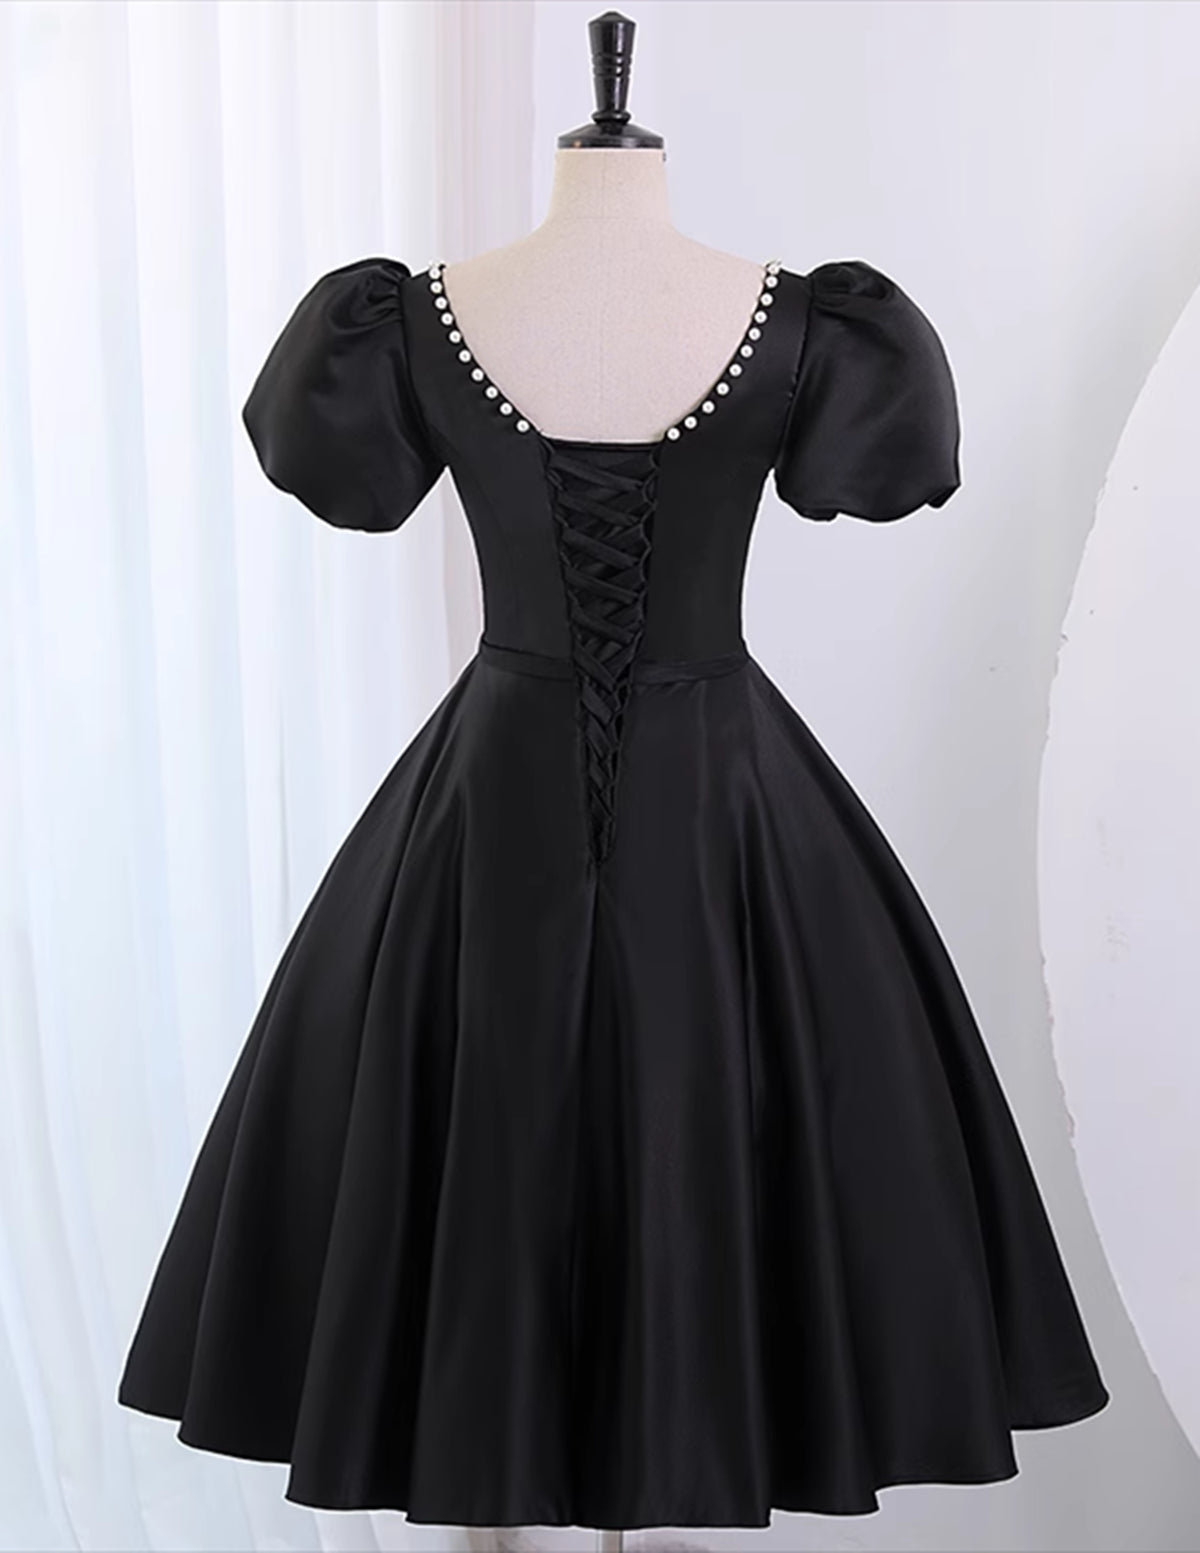 Prom Dress Open Back, Black Satin Short Sleeves Knee Length Party Dress, Black Homecoming Dress